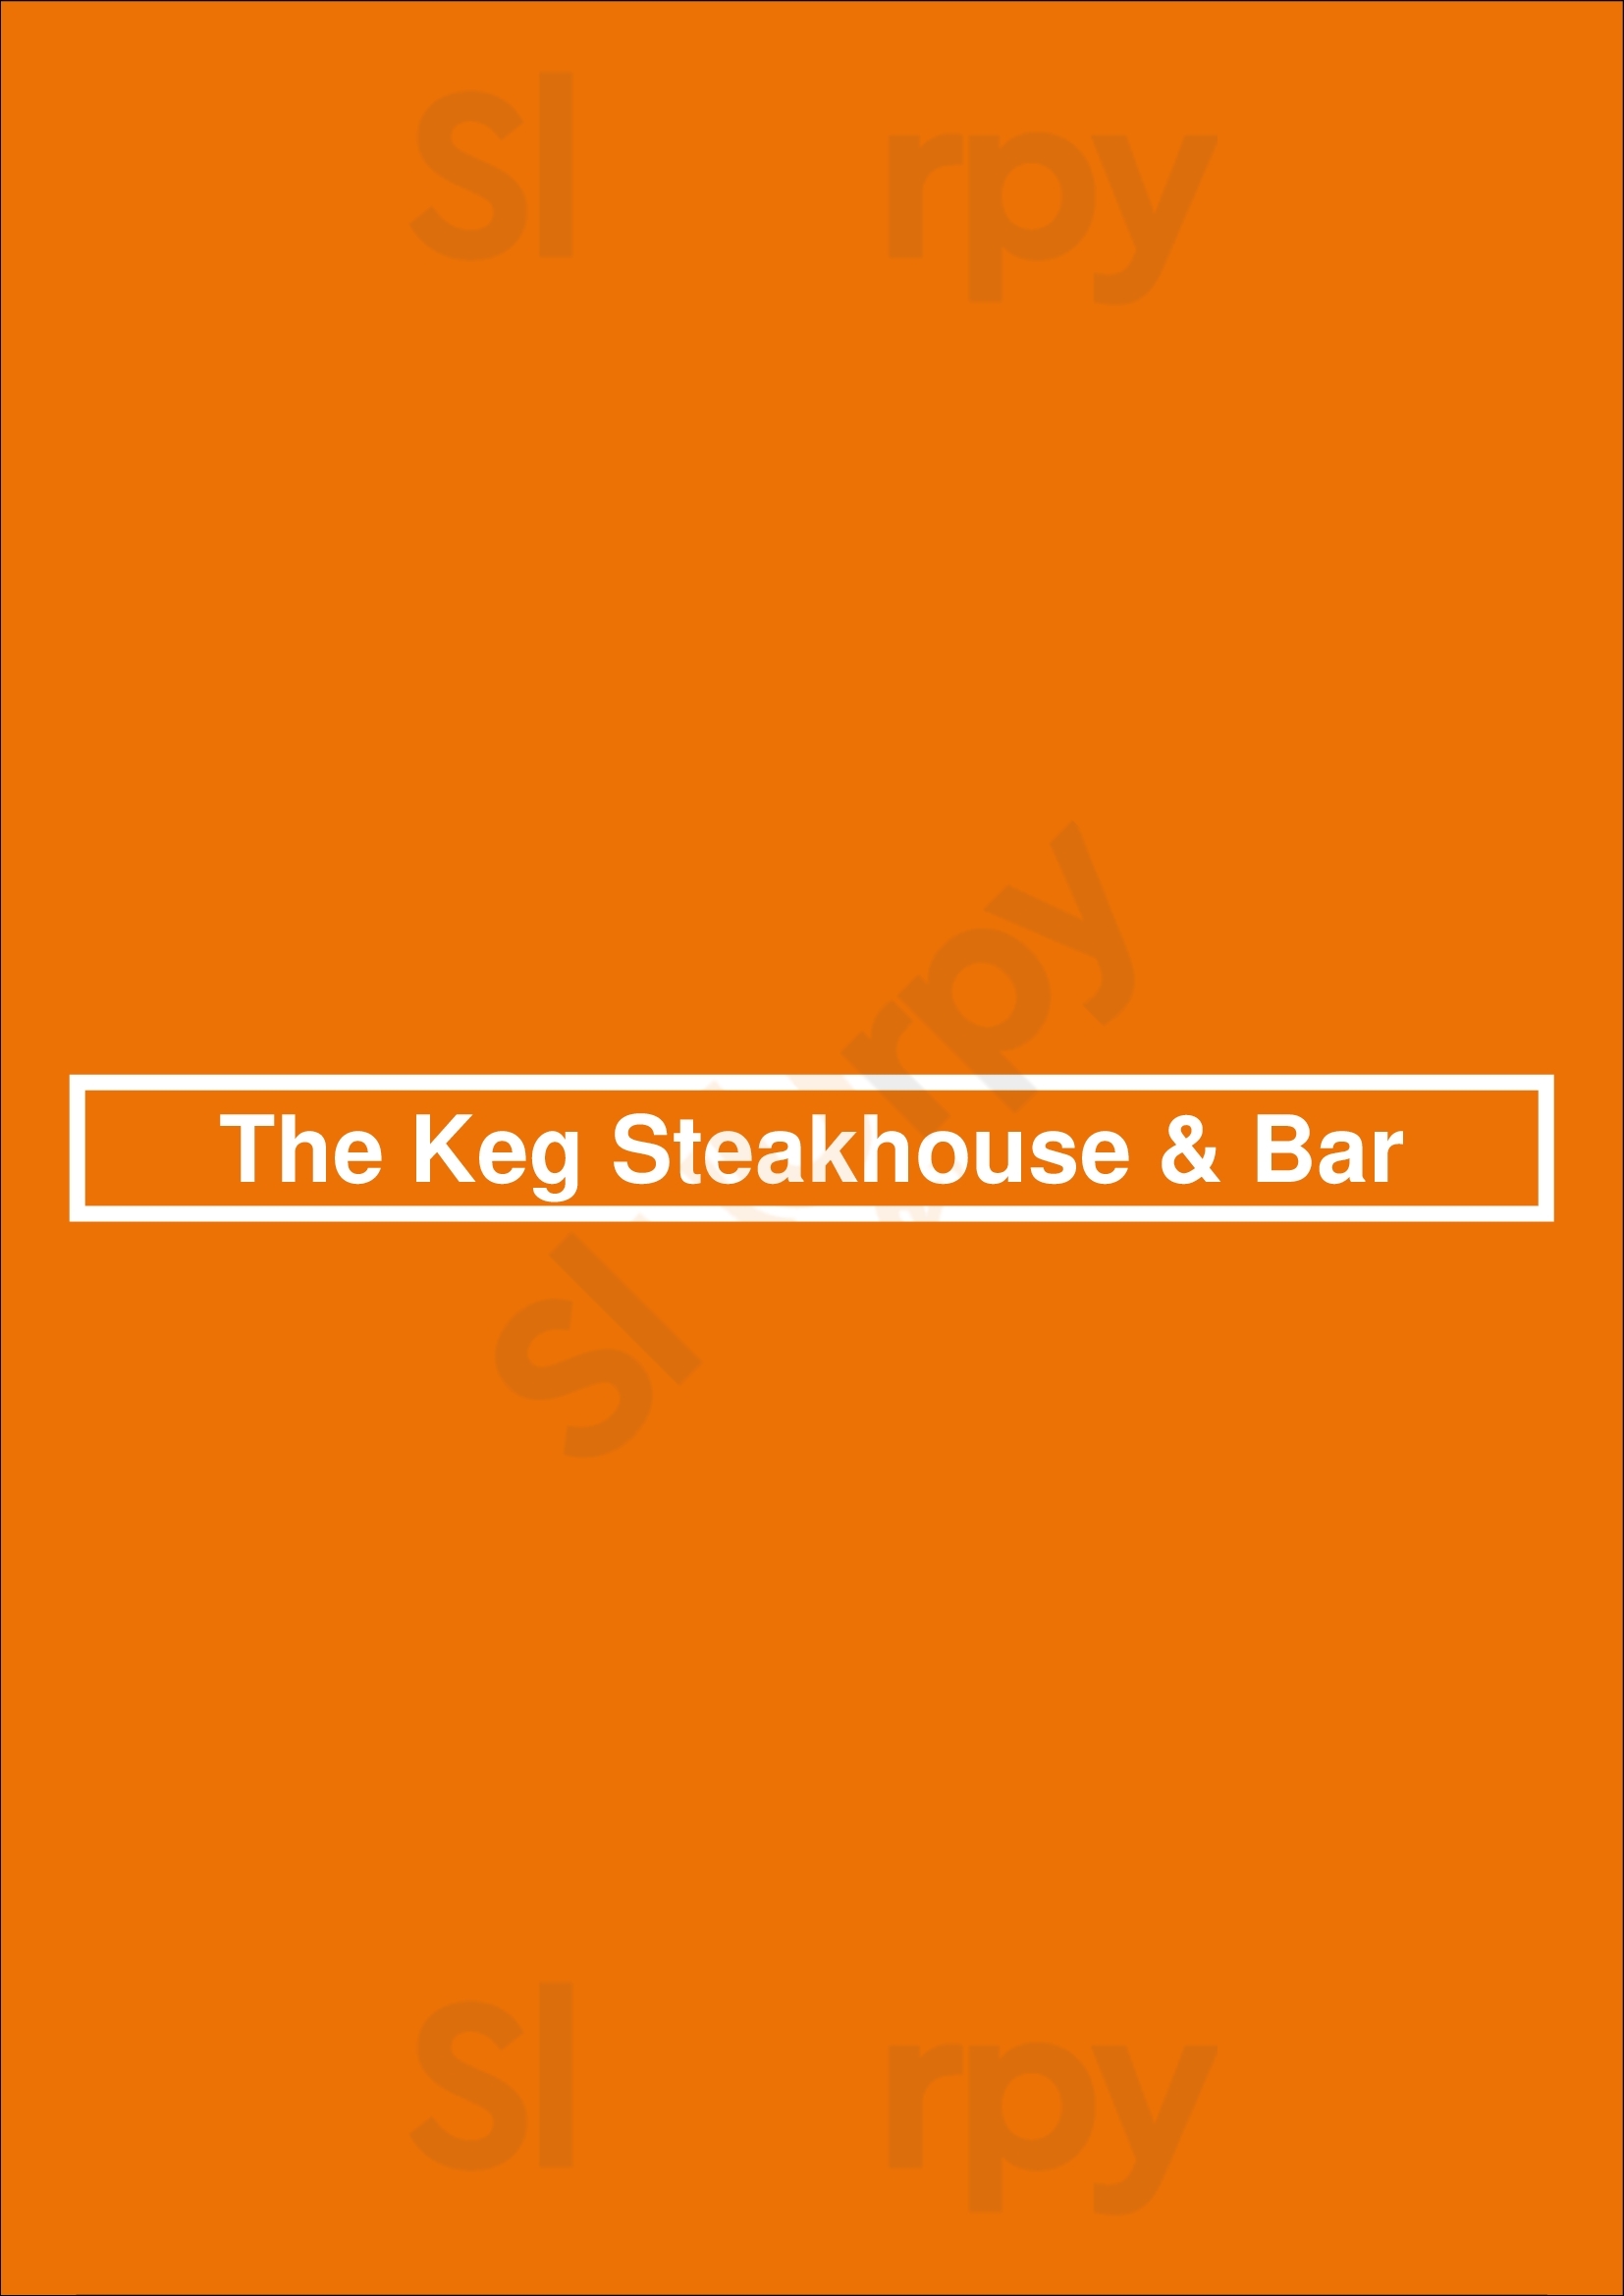 The Keg Steakhouse + Bar - Dartmouth Crossing Dartmouth Menu - 1